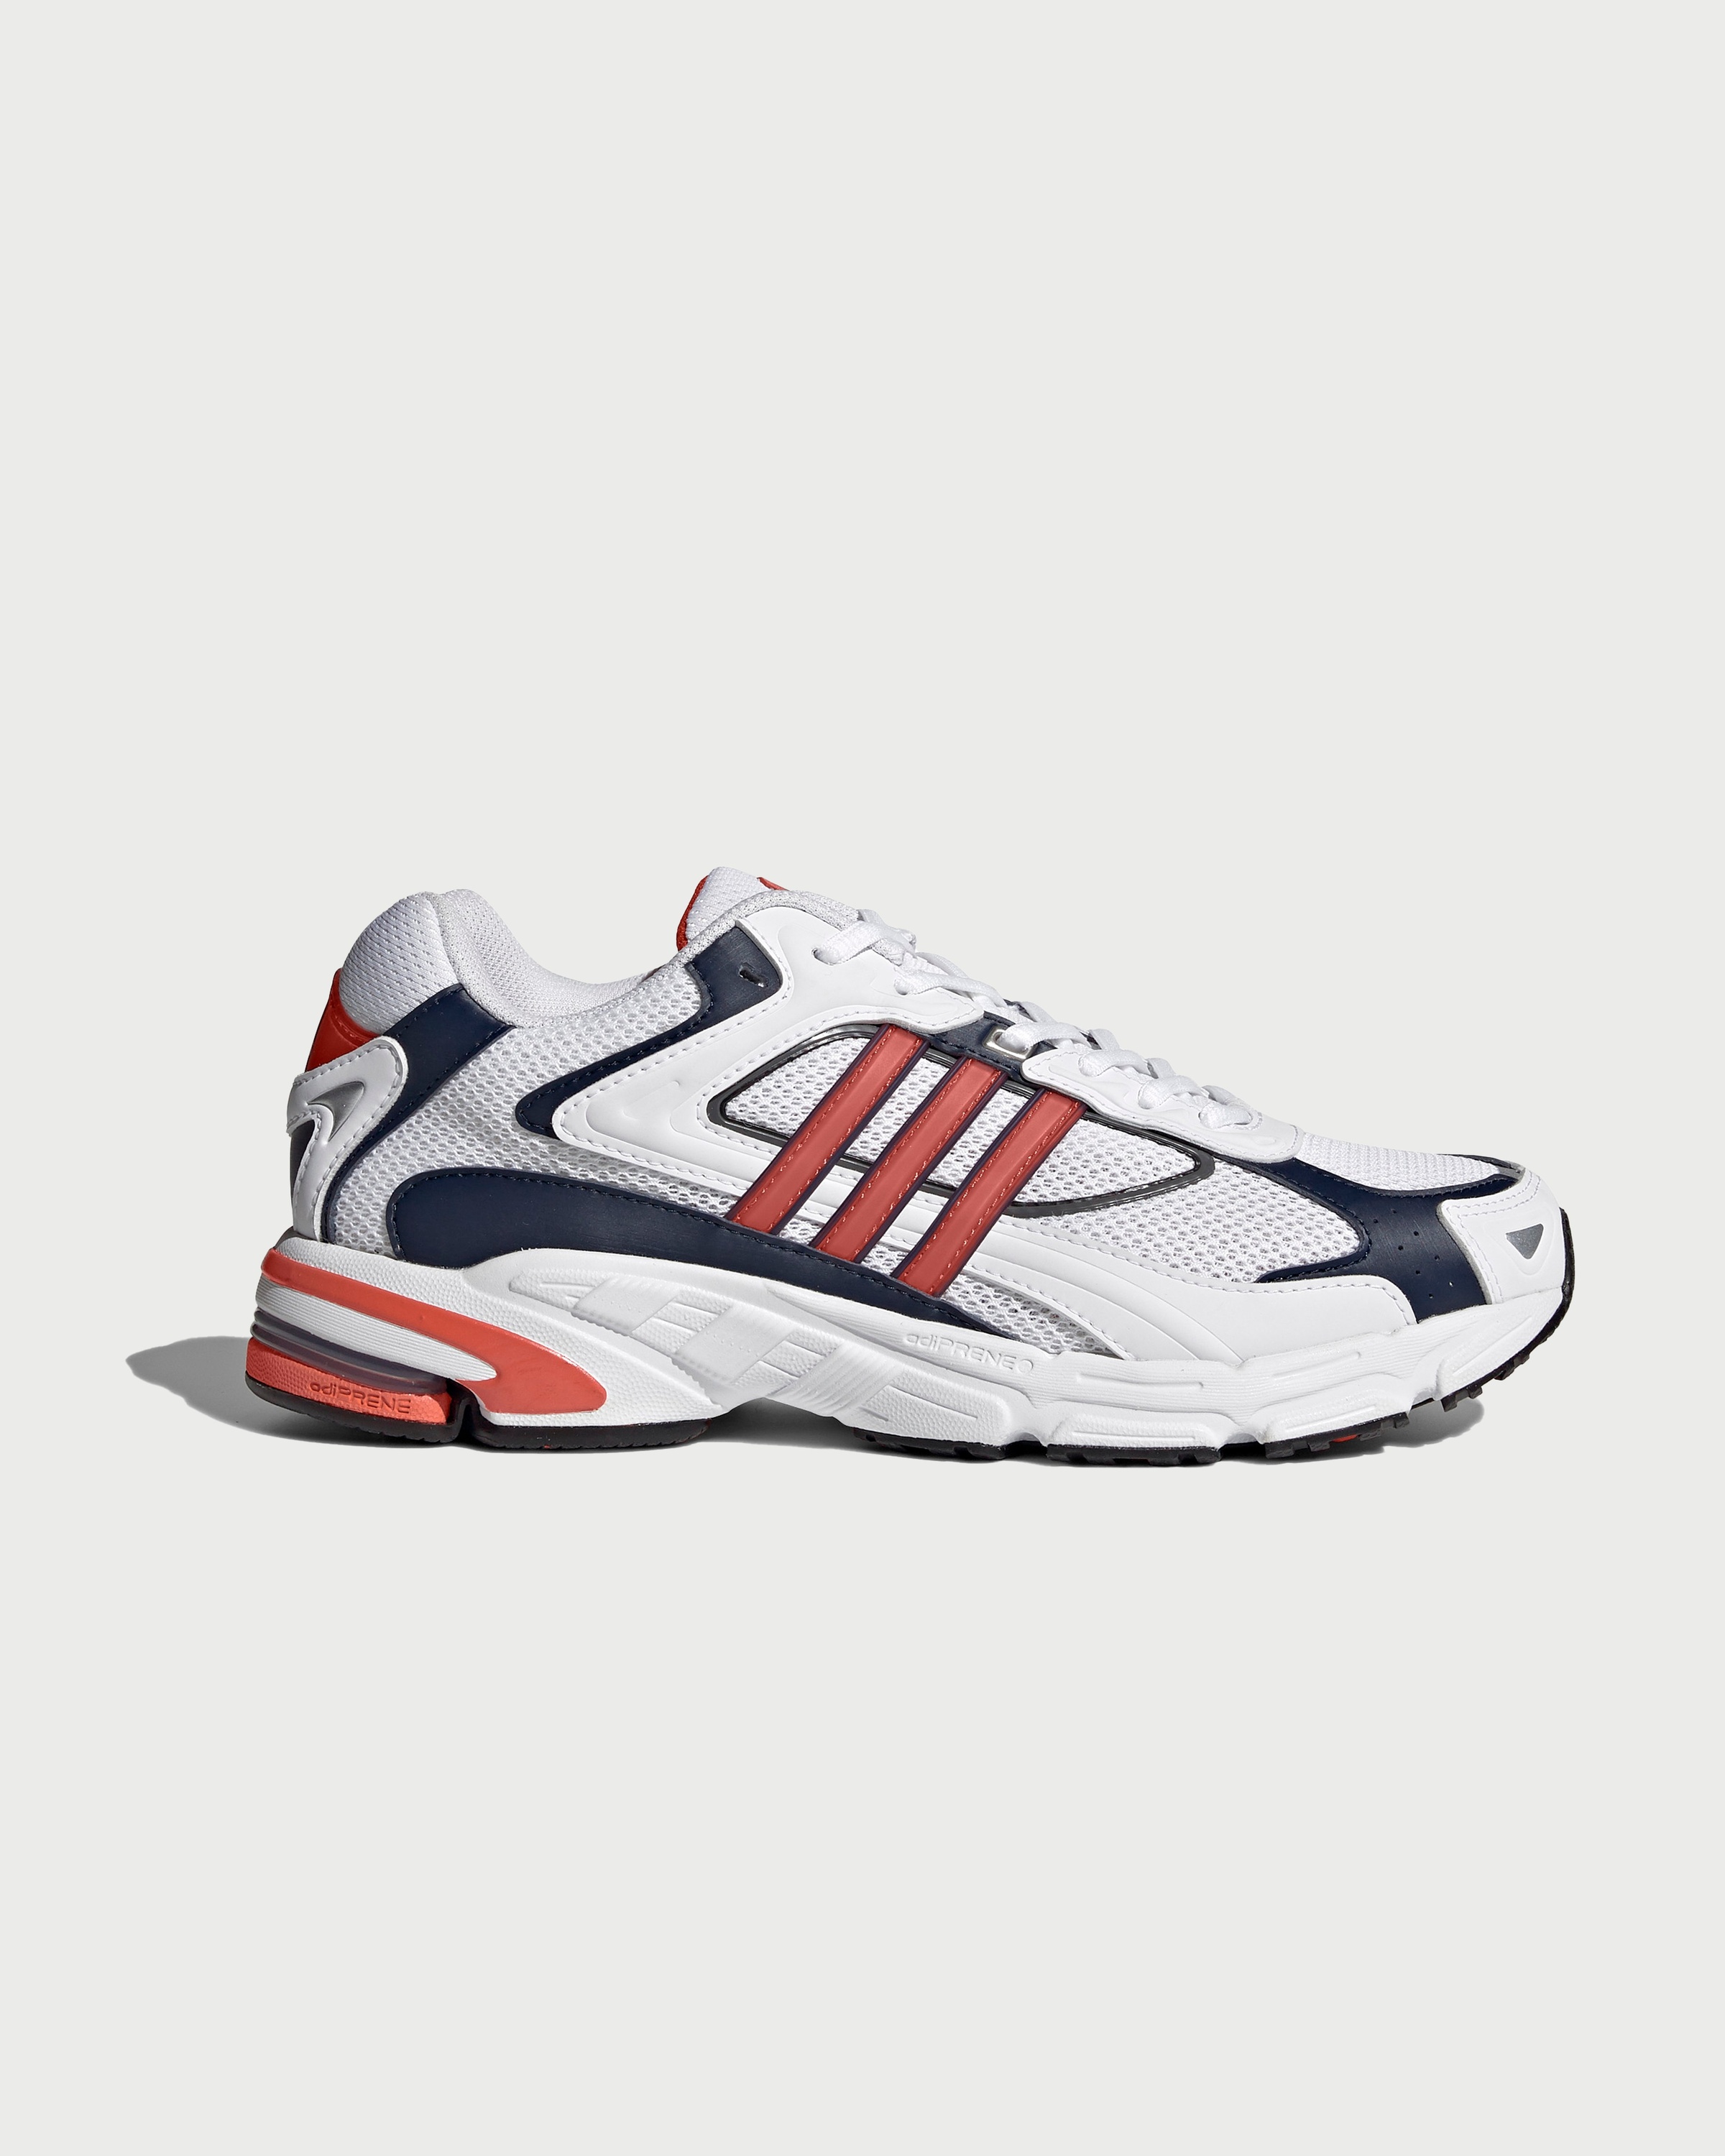 Adidas – Response CL White/Orange - Low Top Sneakers - White - Image 1